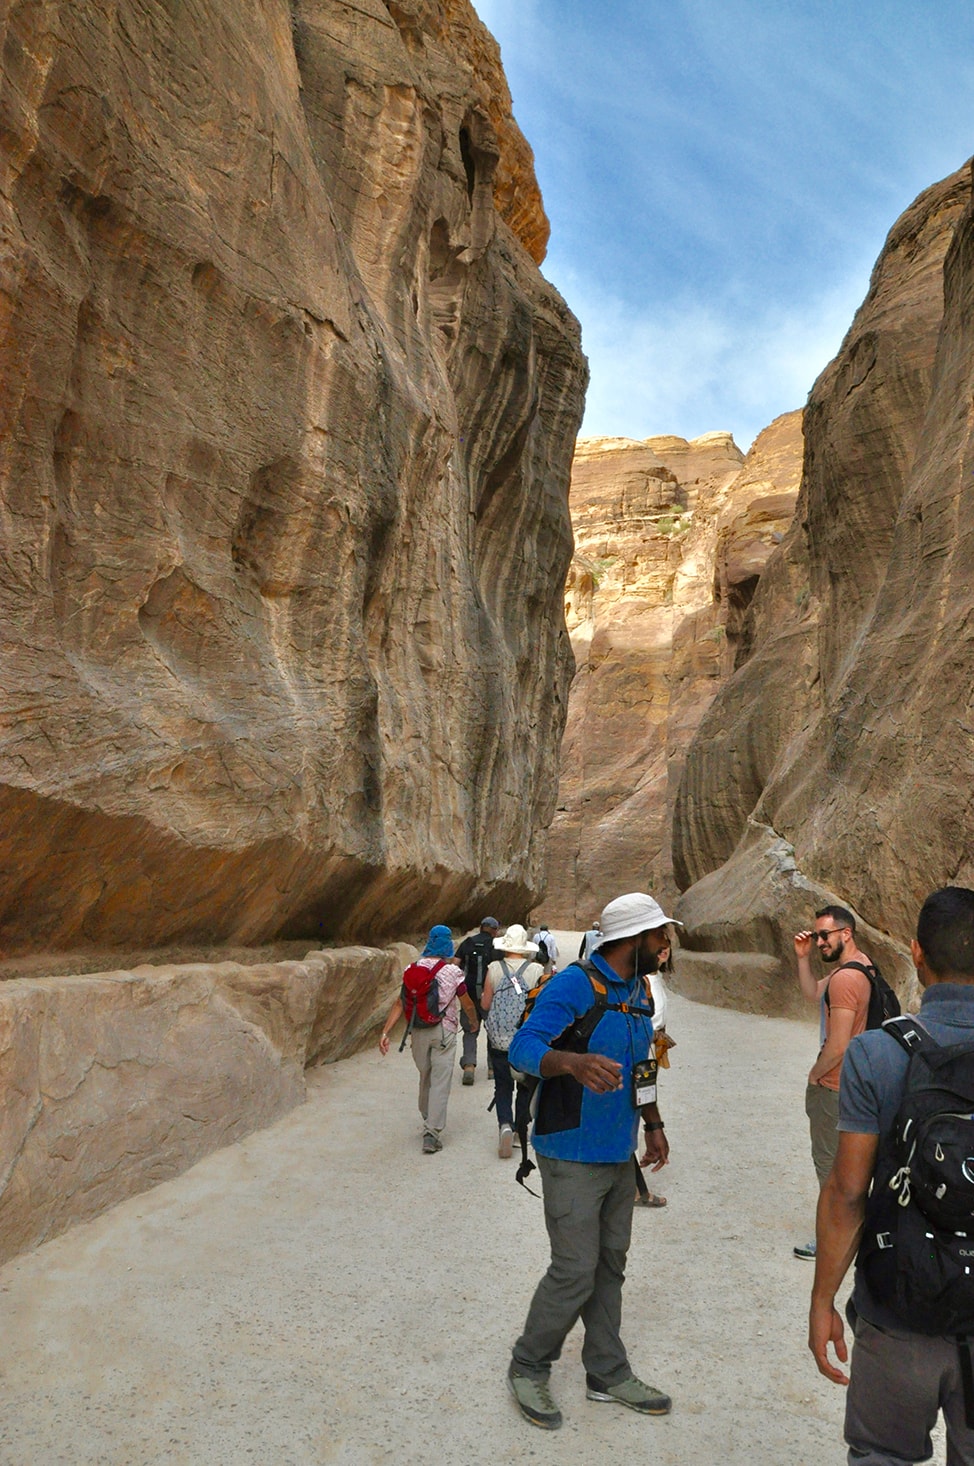 Our Group walking through Petra's passageways